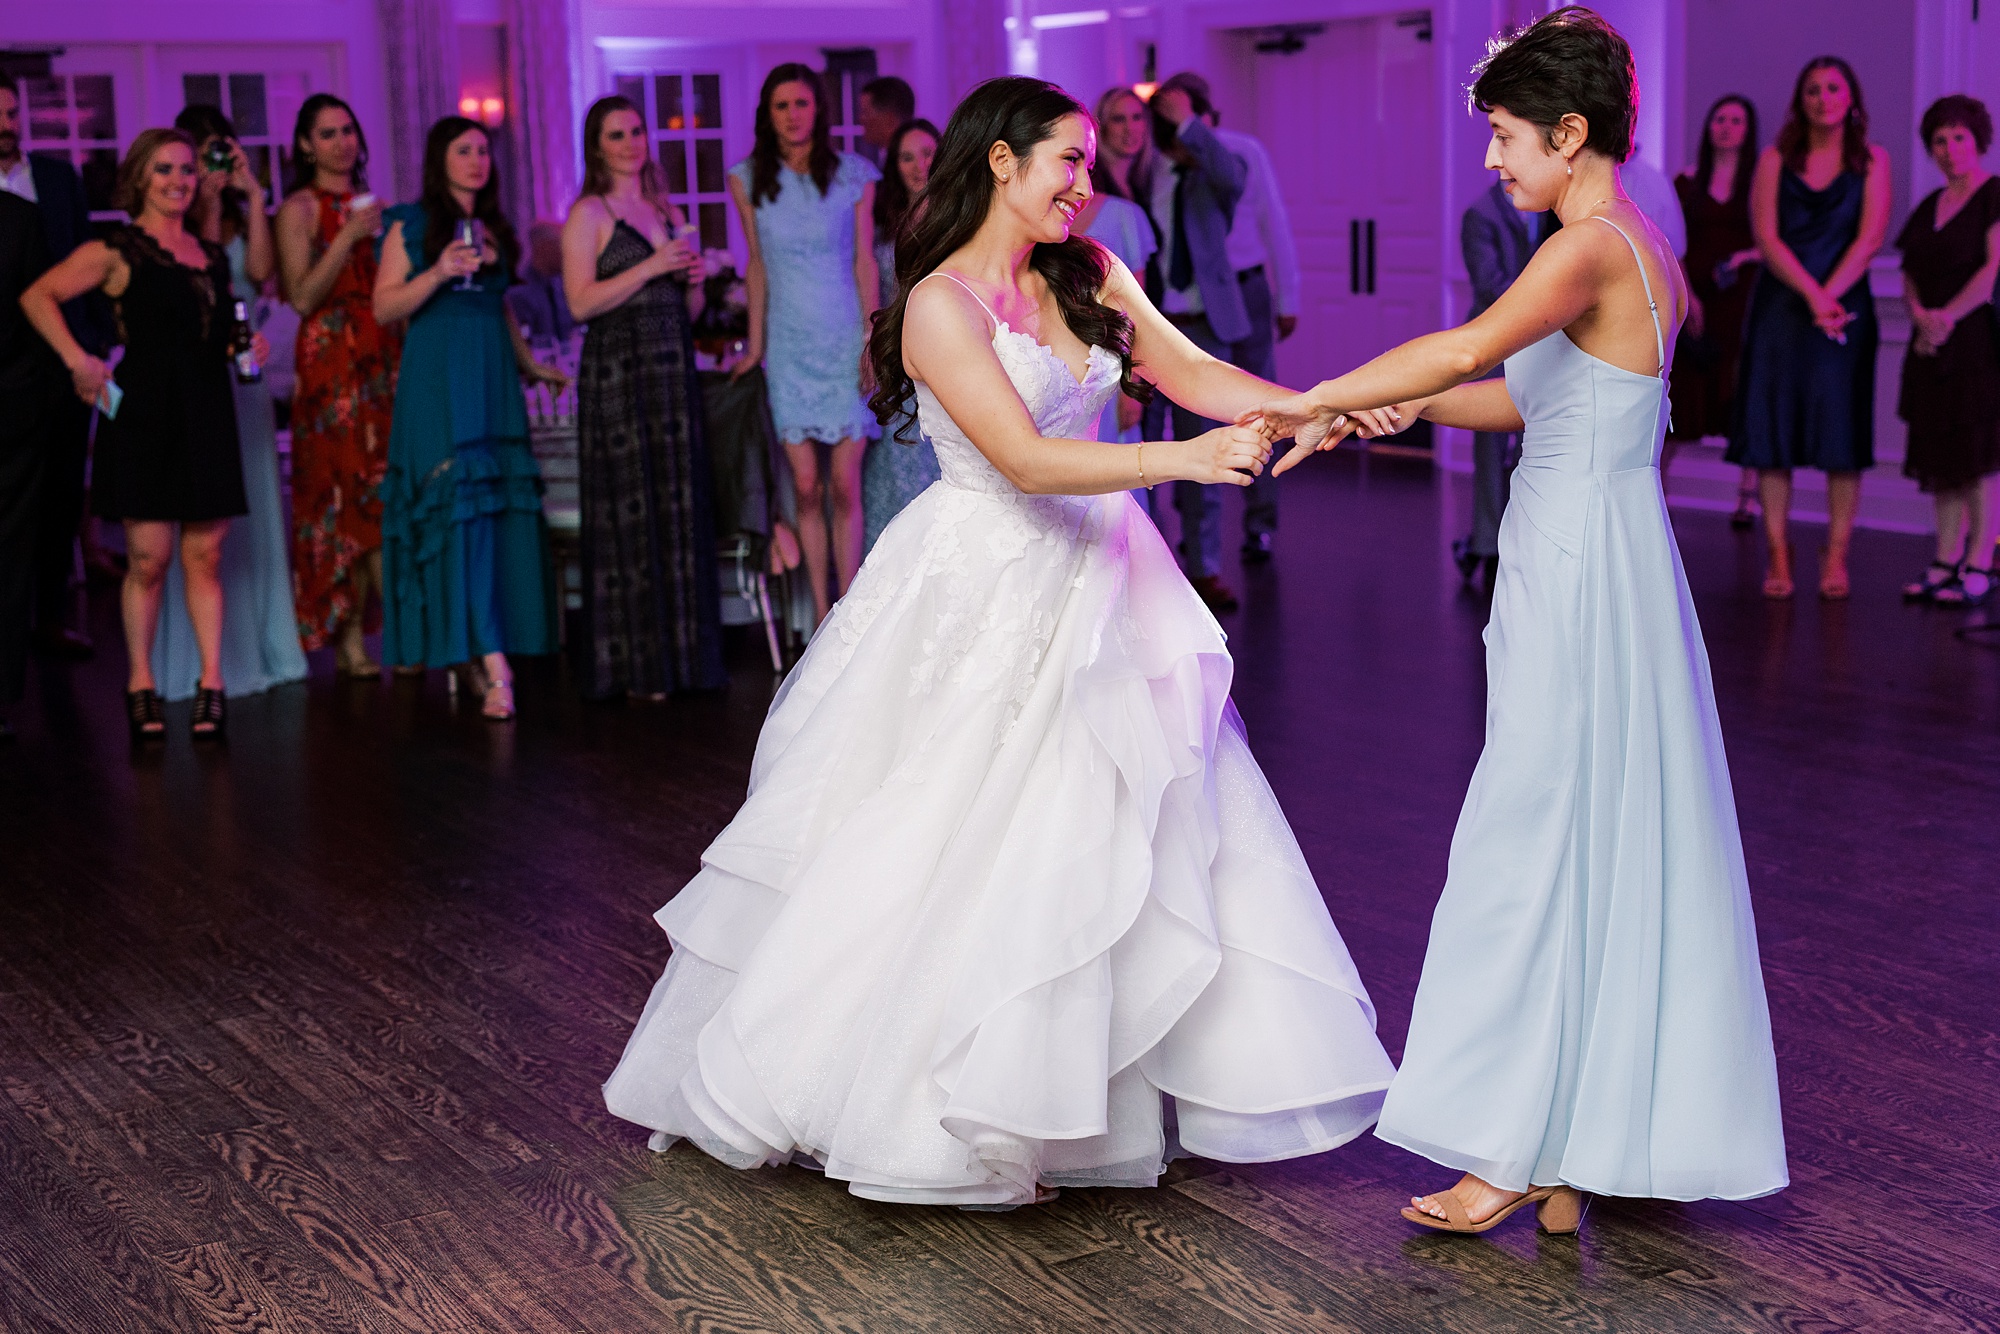 bride dances with bridesmaid in blue dress